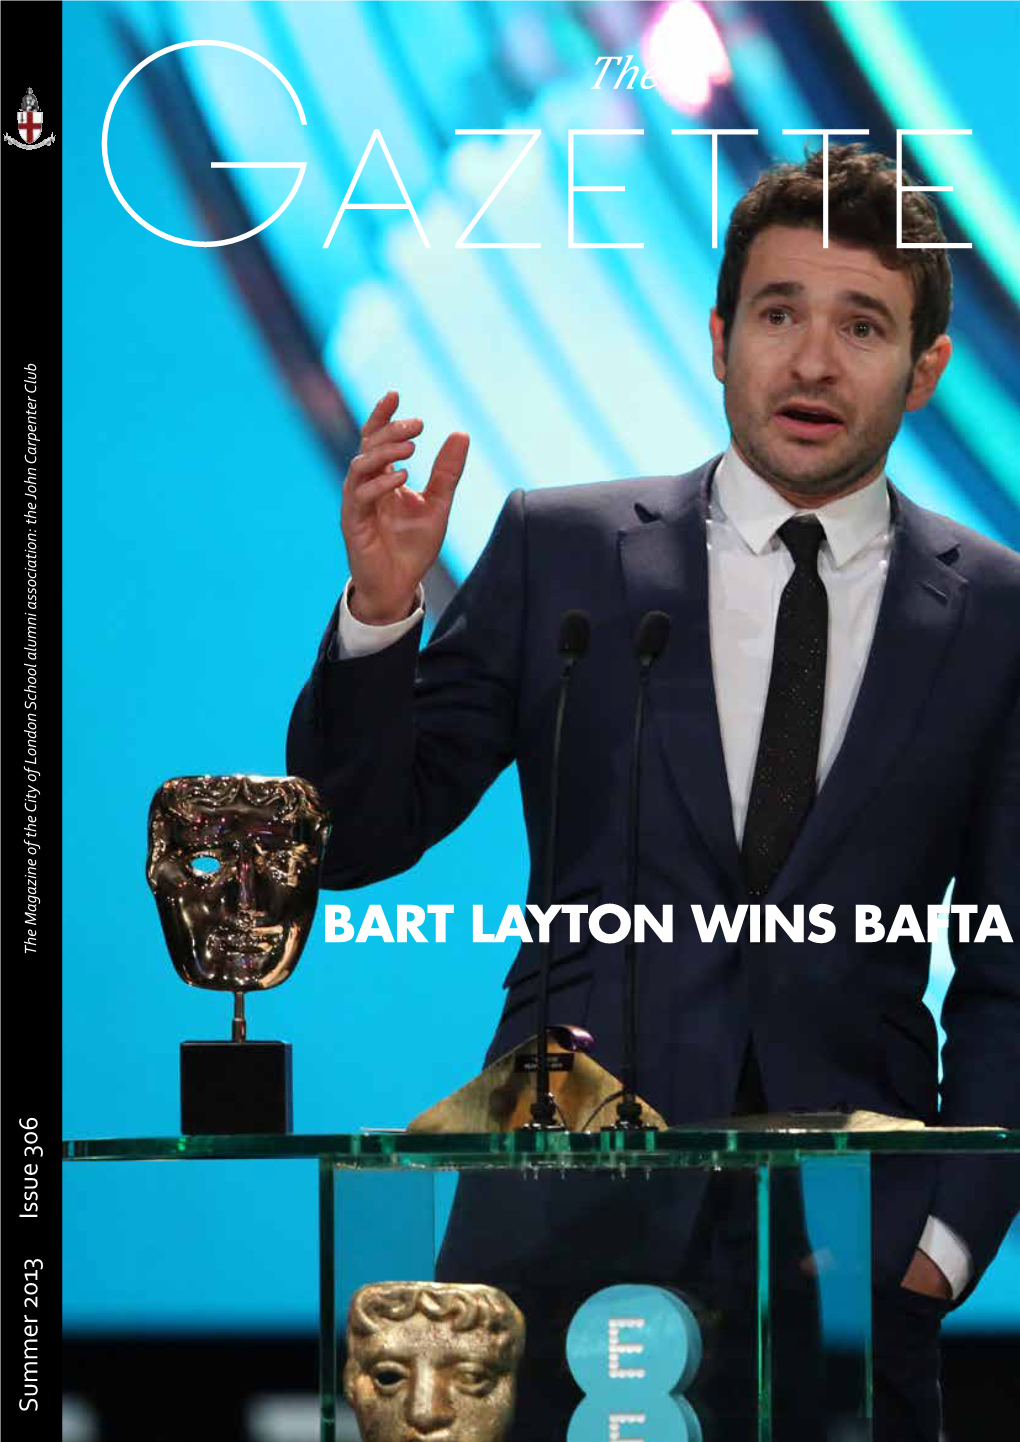 The BART LAYTON WINS BAFTA